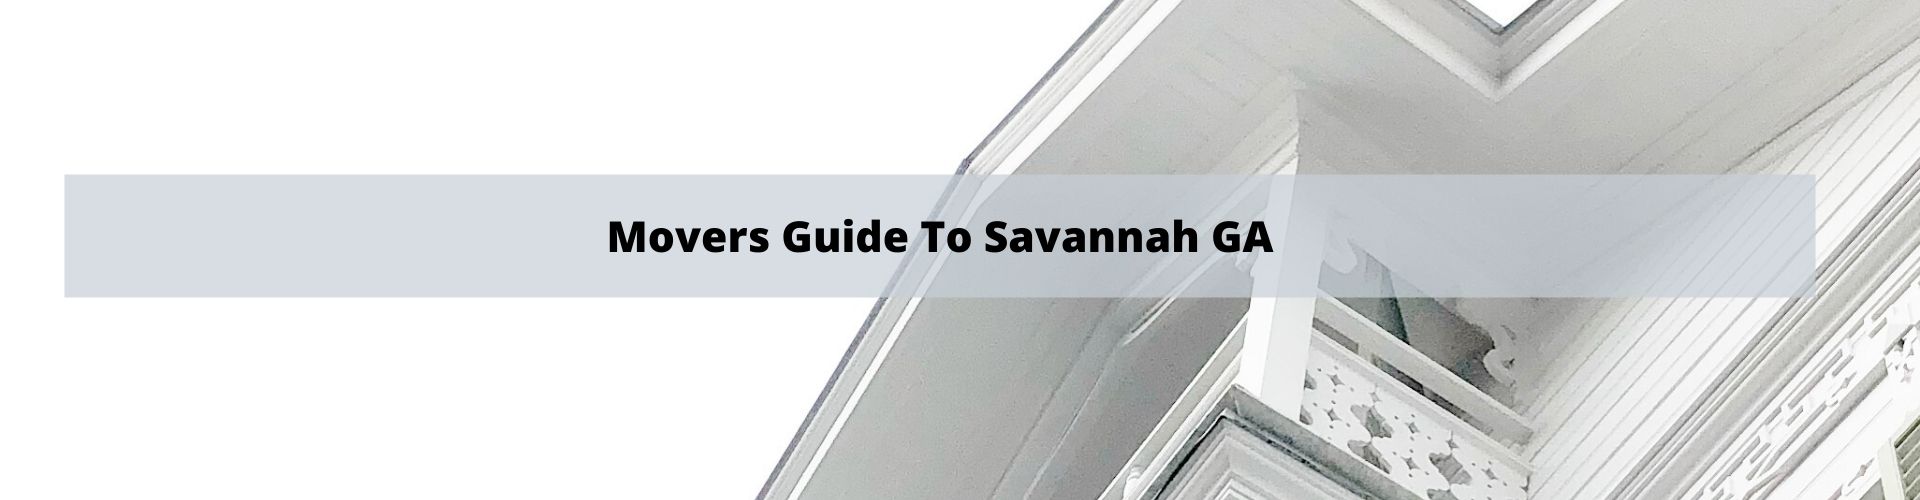 Moving to Savannah GA Guide